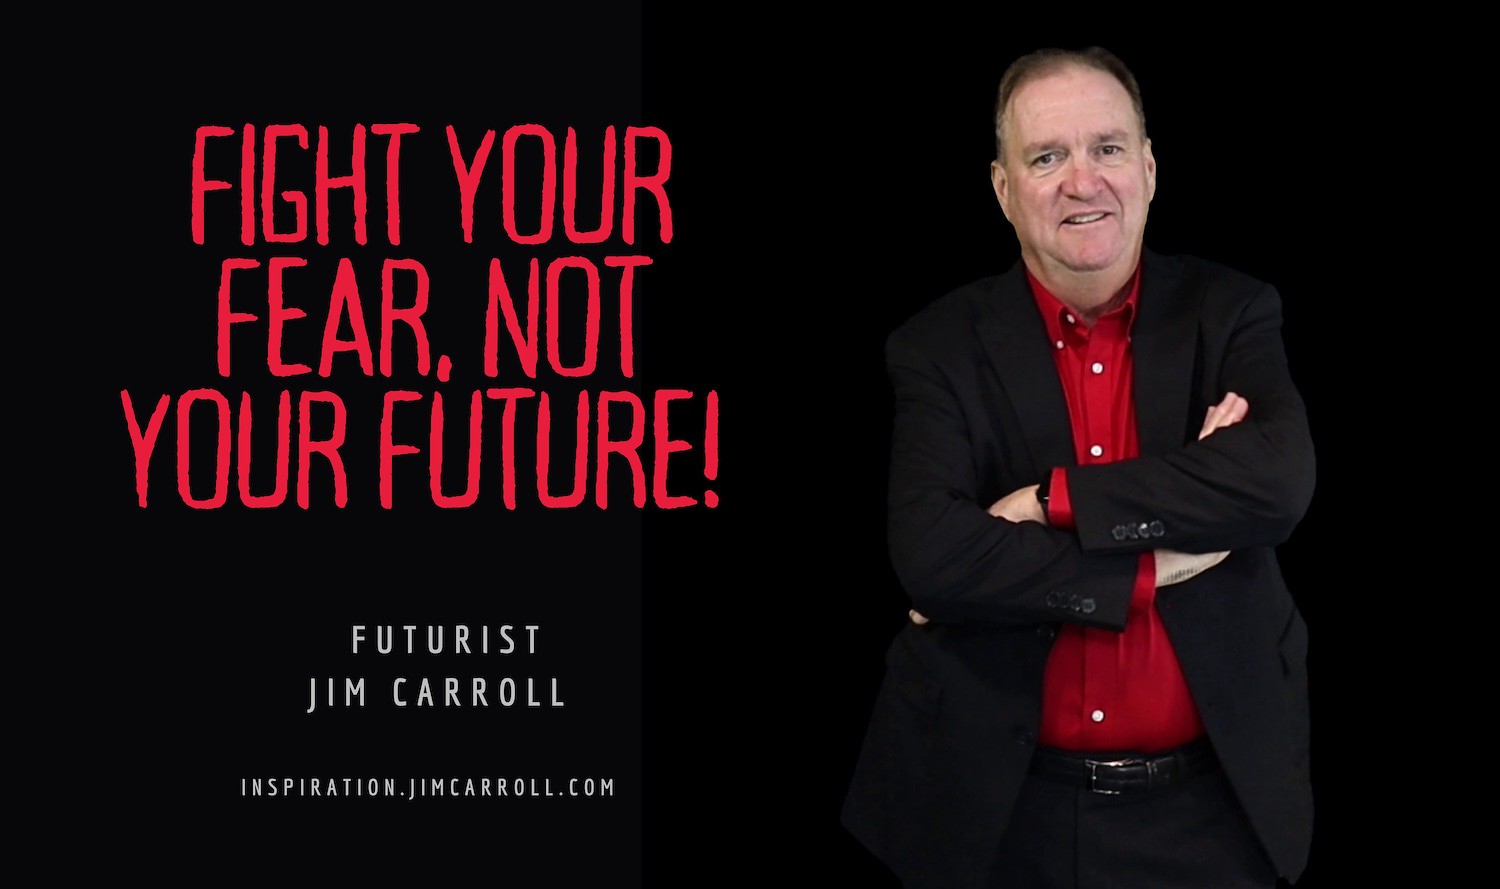 "Fight your fear, not your future!" - Futurist Jim Carroll